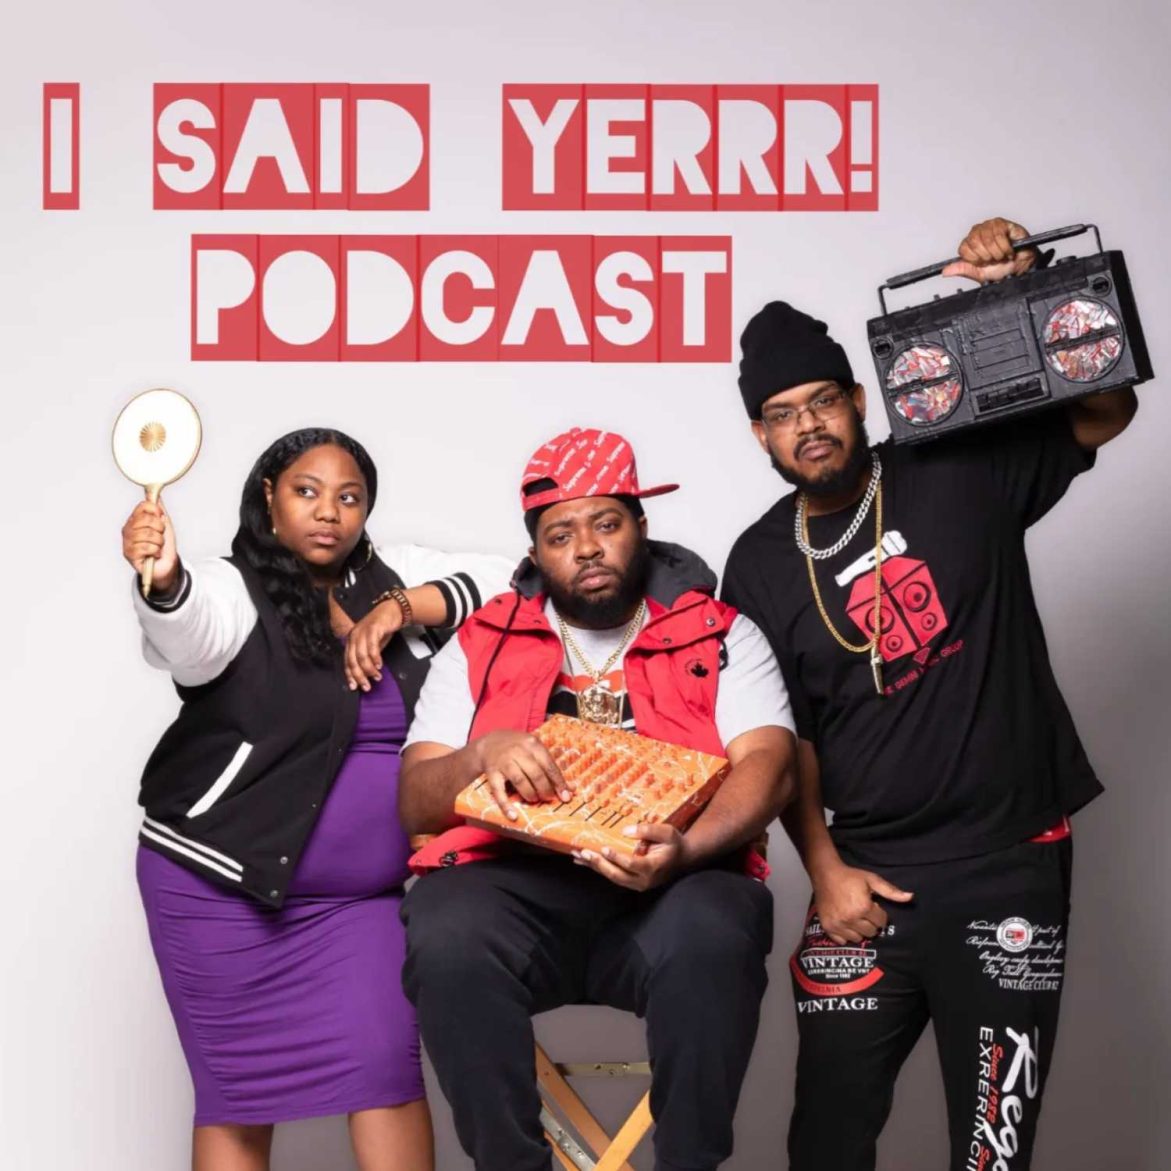 Black Podcasting - I Said Yerrr! Podcast EP59 - "Cold Chicken"